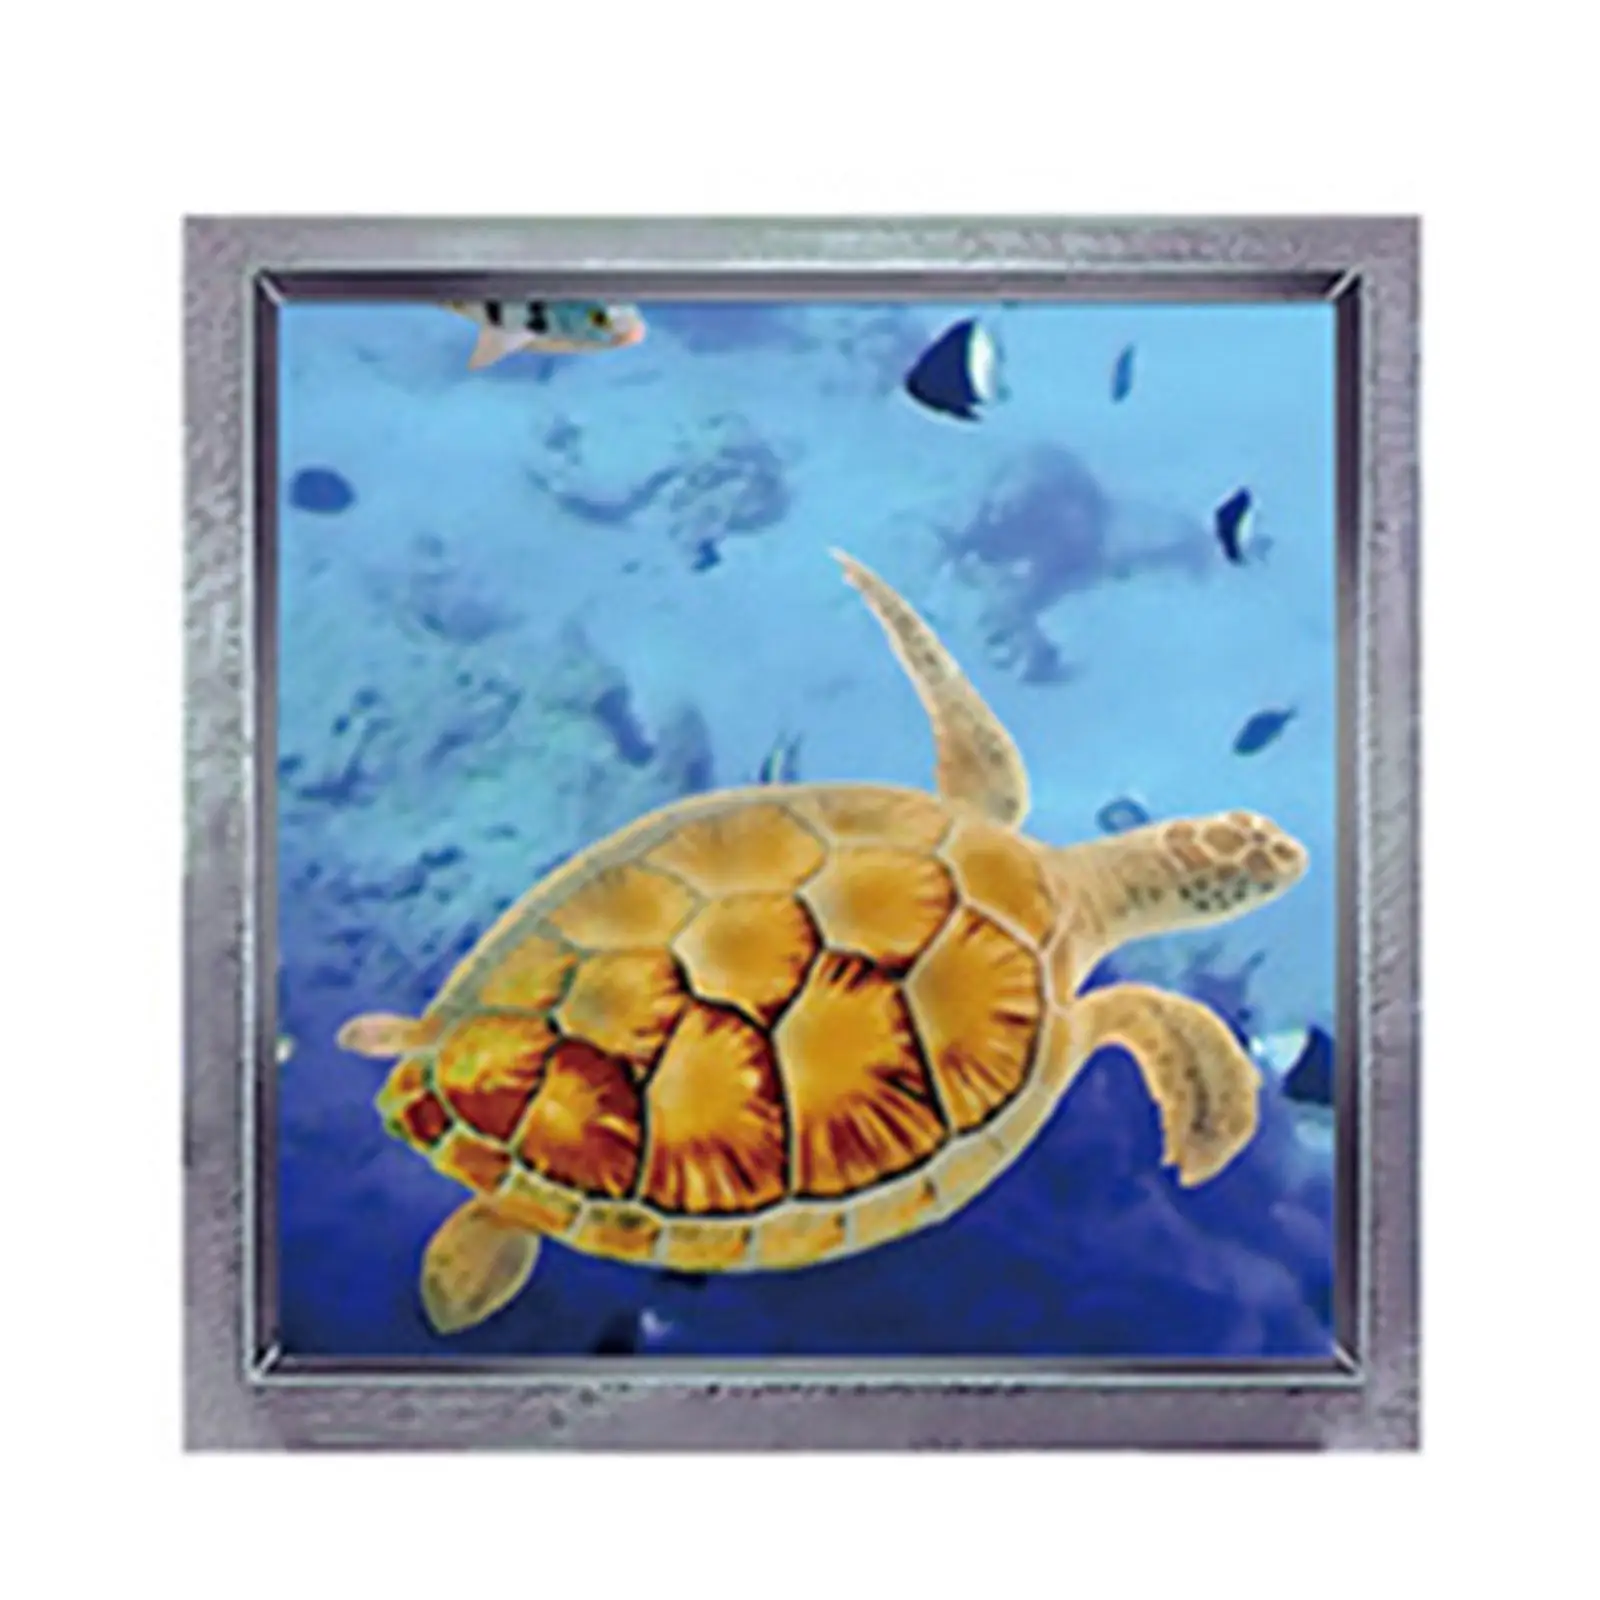 6x Non Slip Bath Tub Stickers Sea Turtle Underwater World Waterproof Square Bath Treads Stickers for Shower Bath Decorations